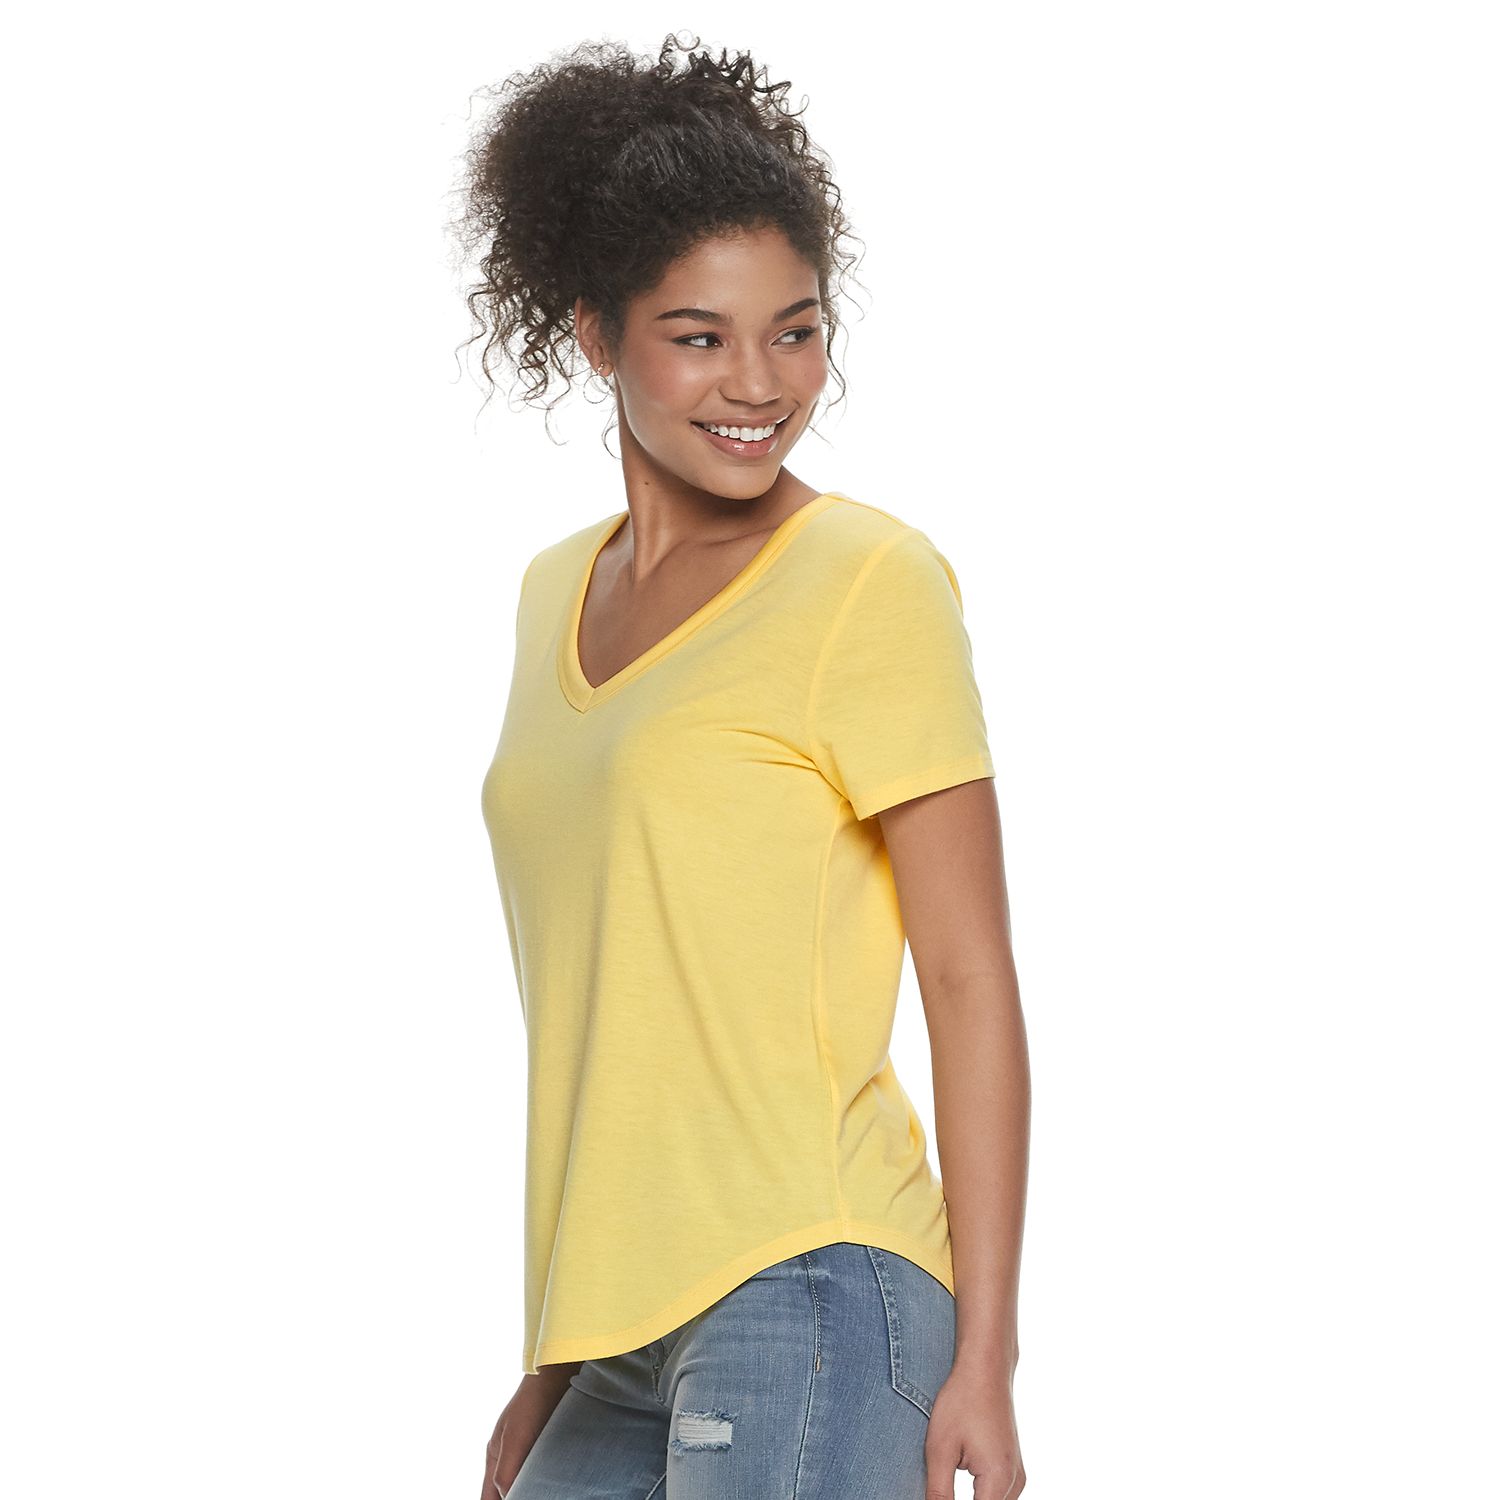 Juniors Yellow Tops, Clothing | Kohl's